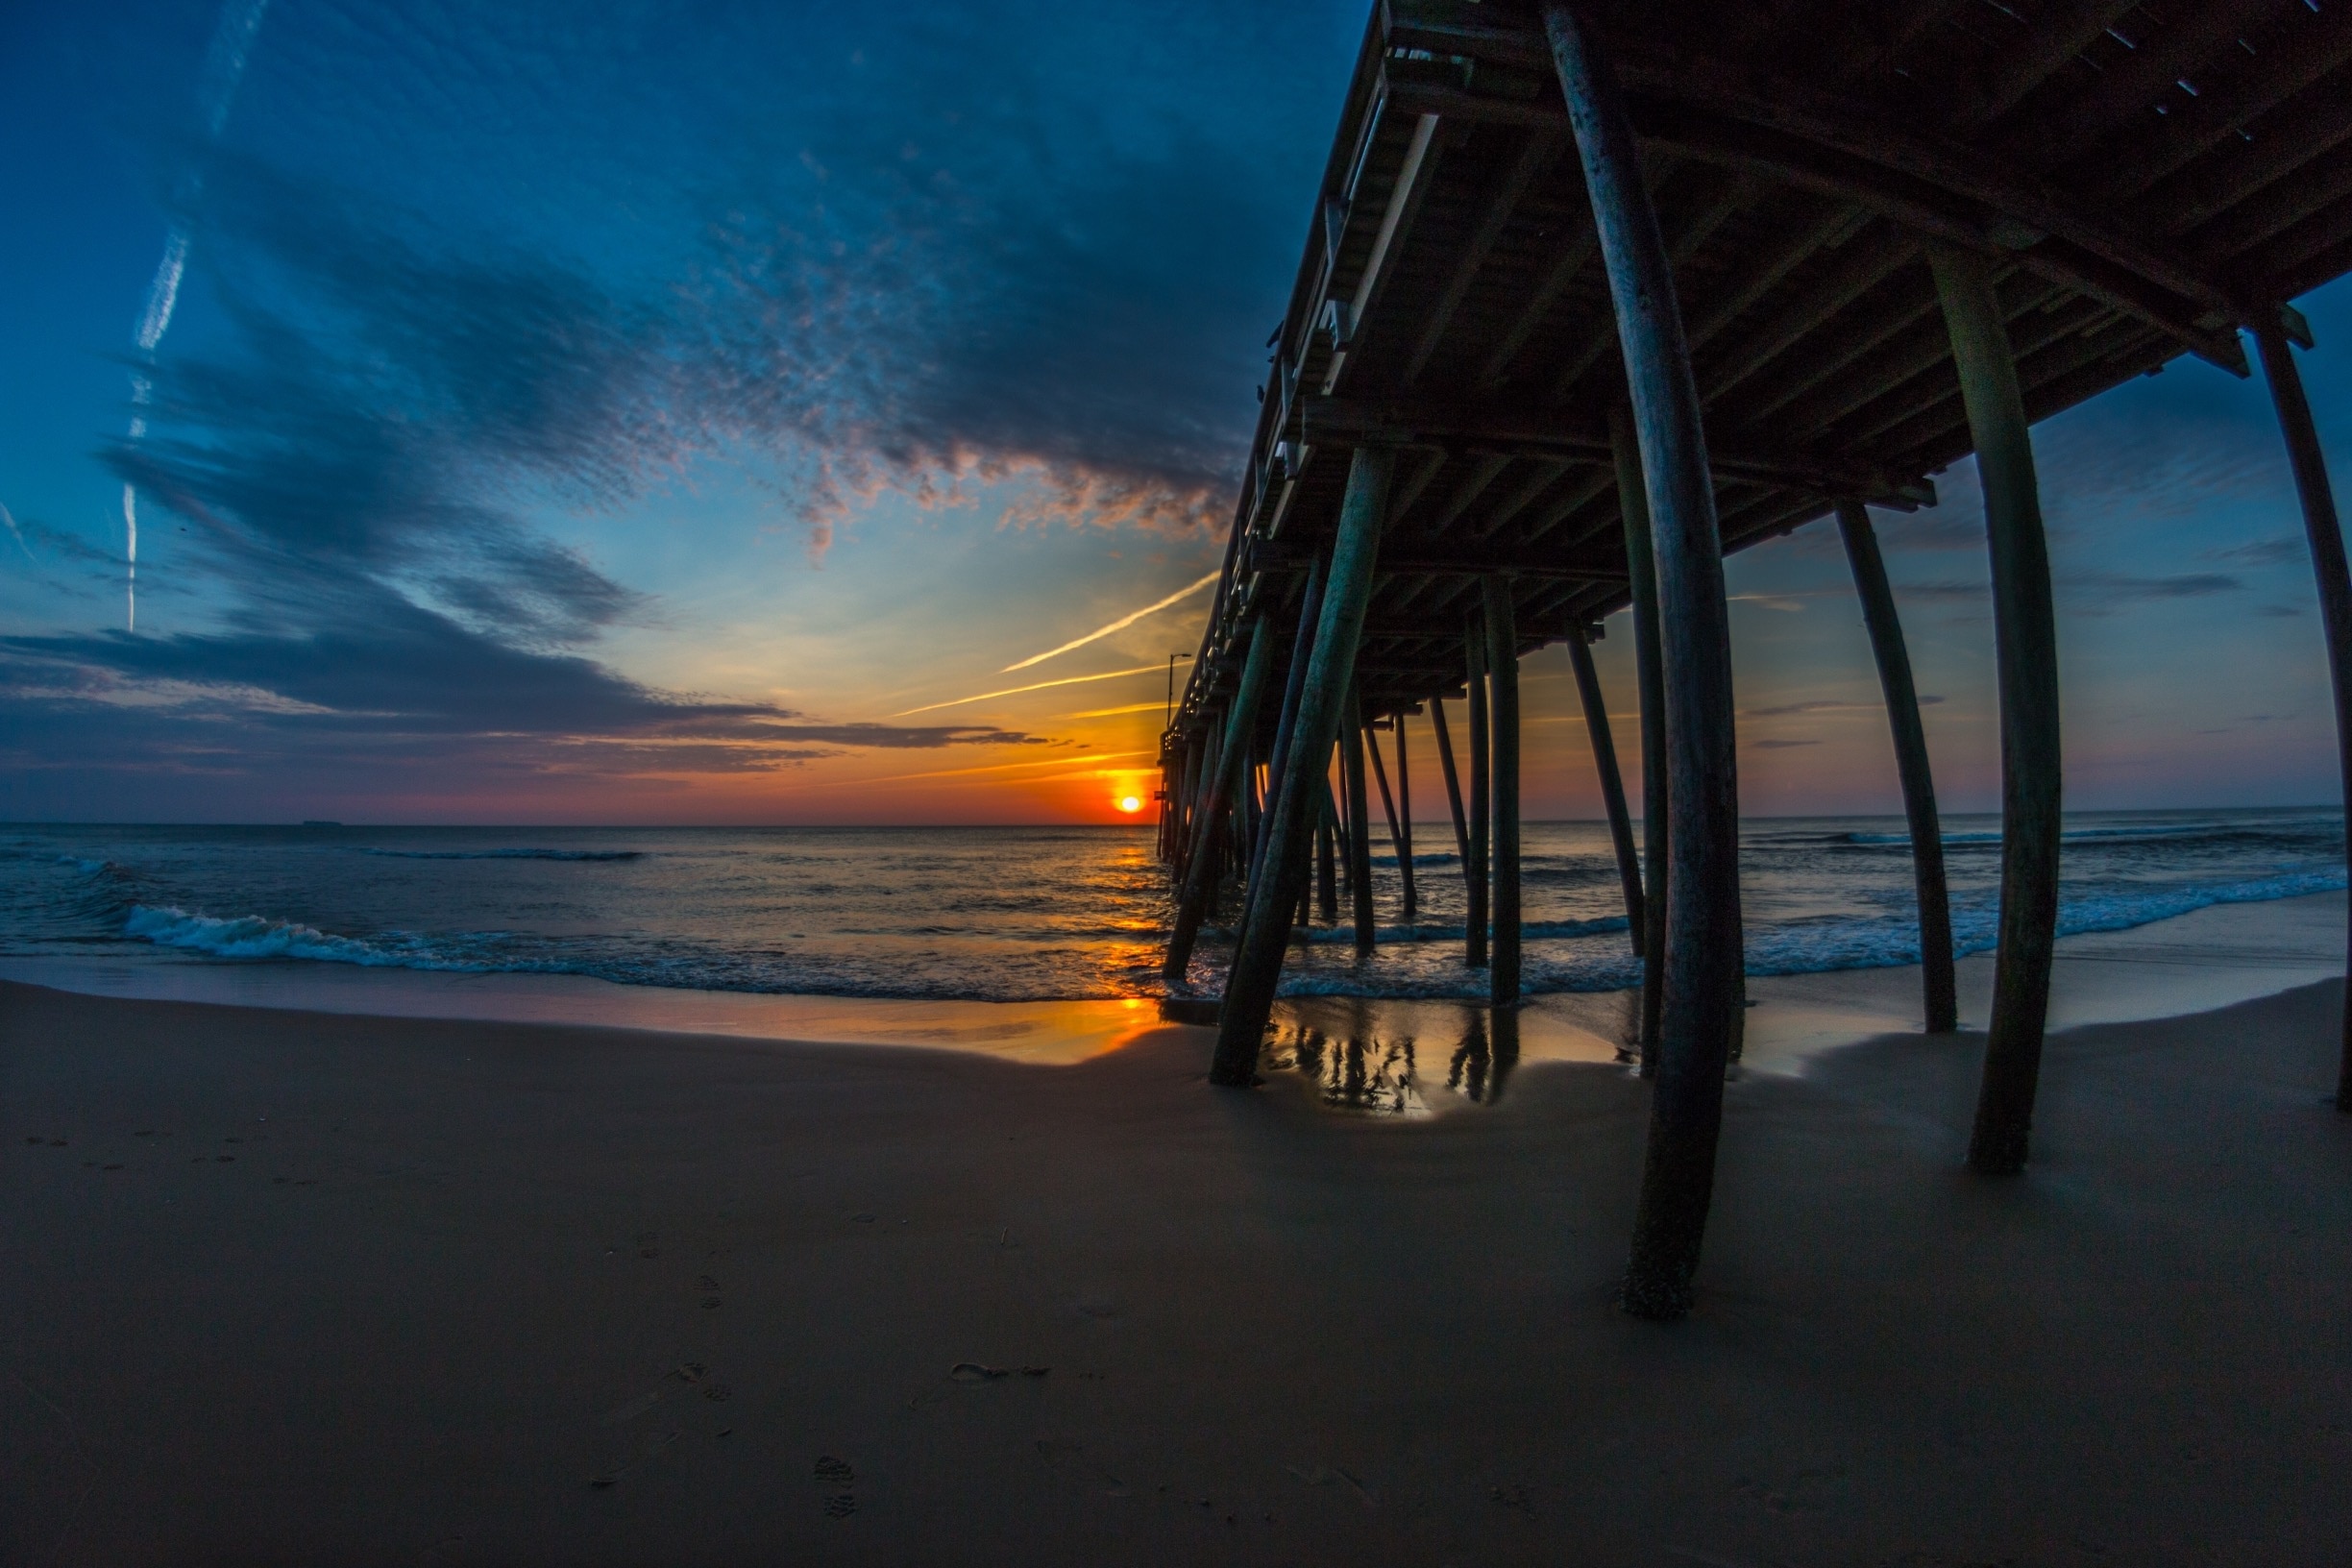 A beautiful sunrise at the Virginia Beach  Pier. Waking up early has never been so beautiful. 

#virginiabeach #sunrise
#travel #roadtrip #pier #ocean #nature #landscape
#Golden
#nature